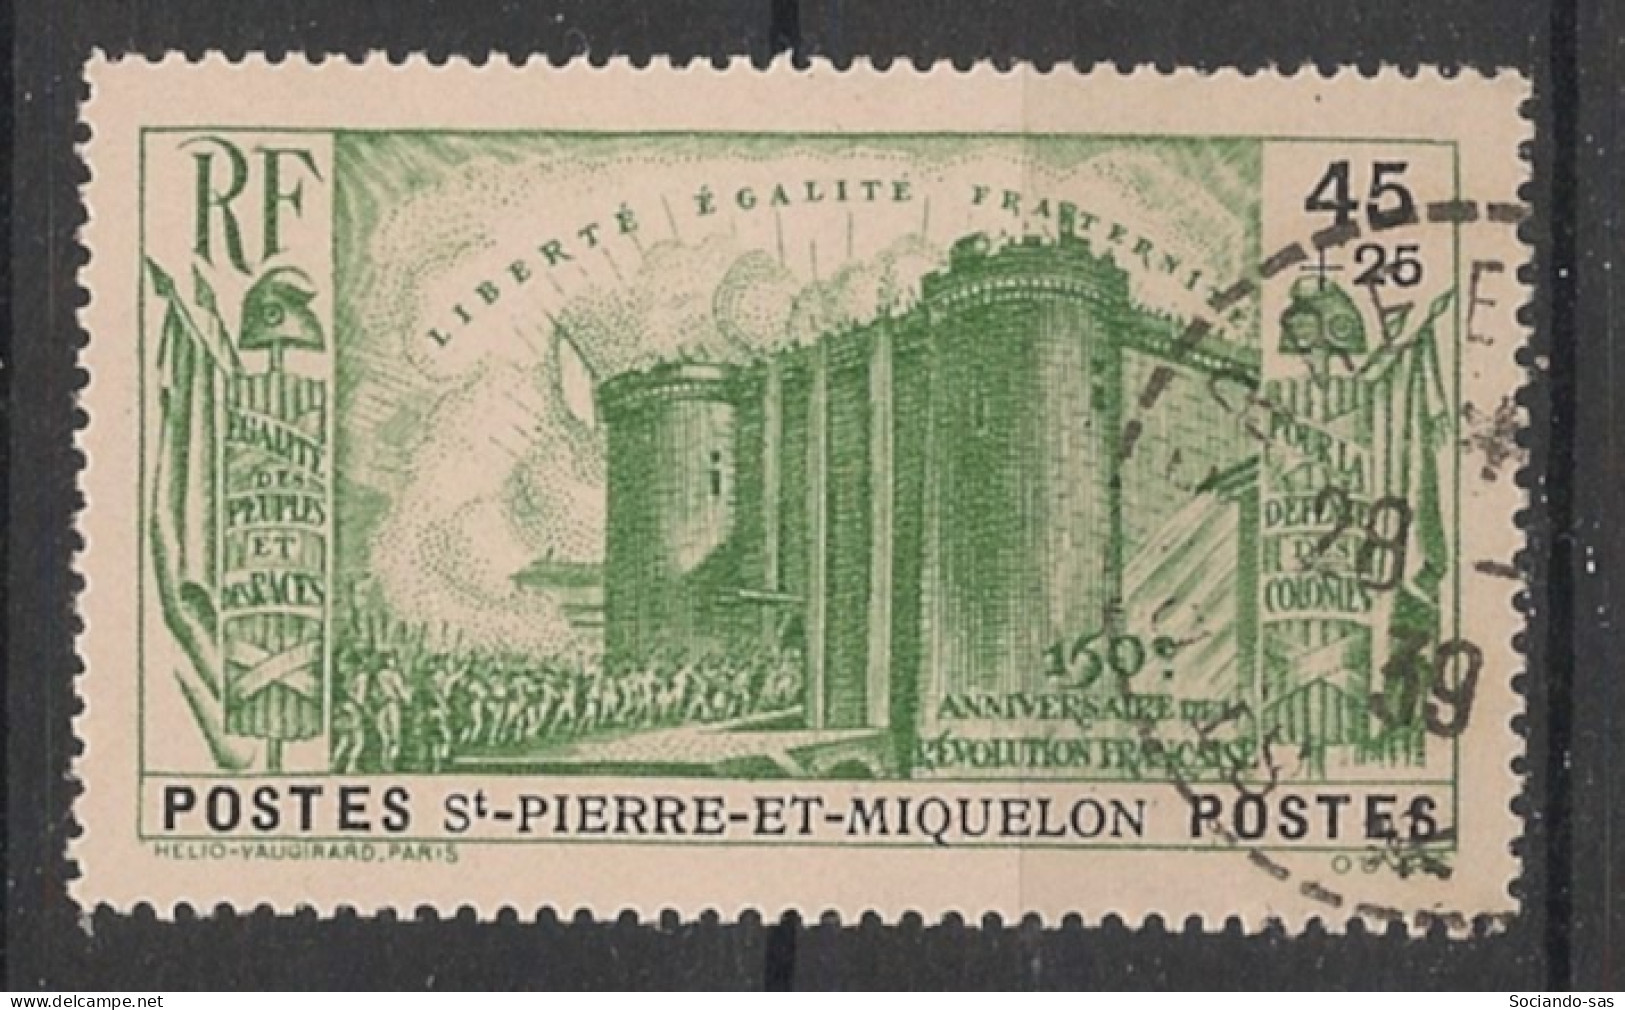 SPM - 1939 - N°YT. 191 - Révolution Française 45c + 25c Vert - Oblitéré / Used - Gebruikt